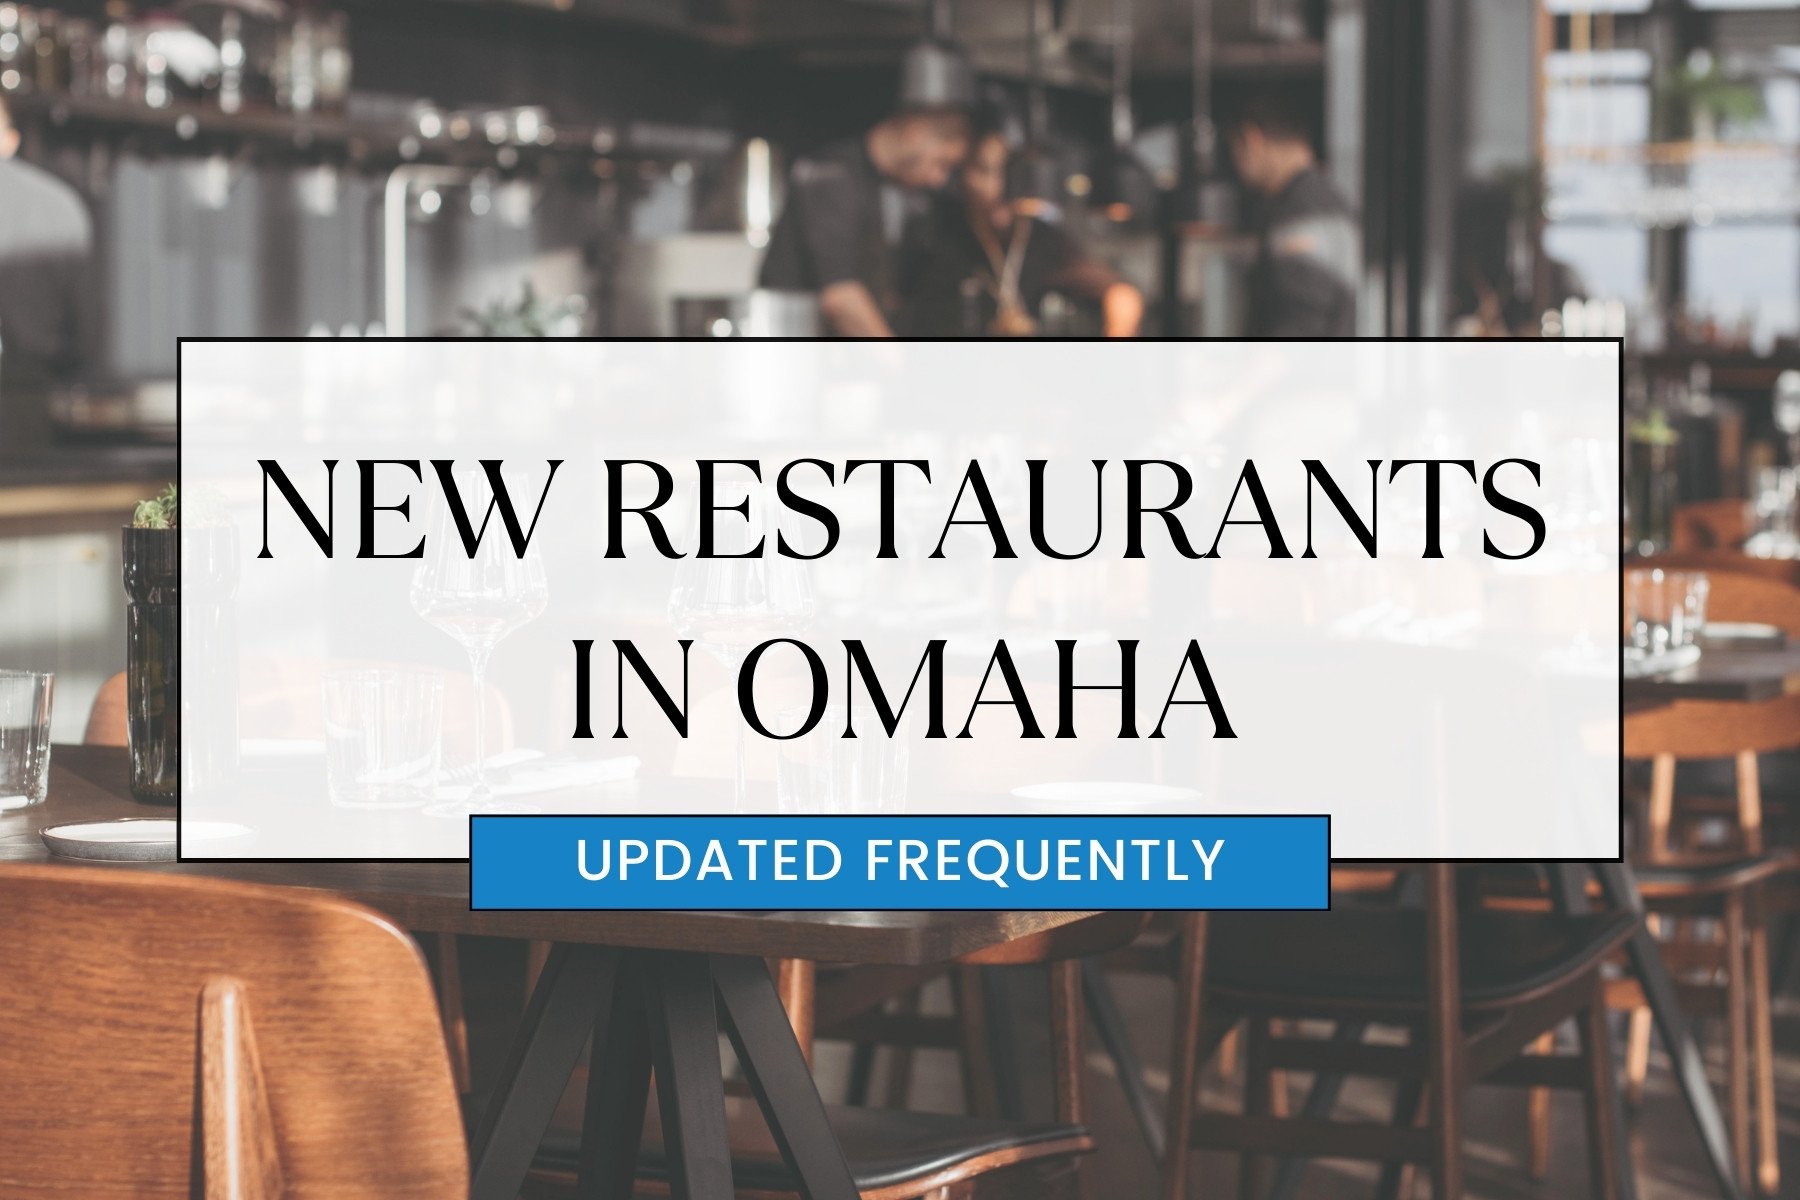 List of New Restaurants in Omaha